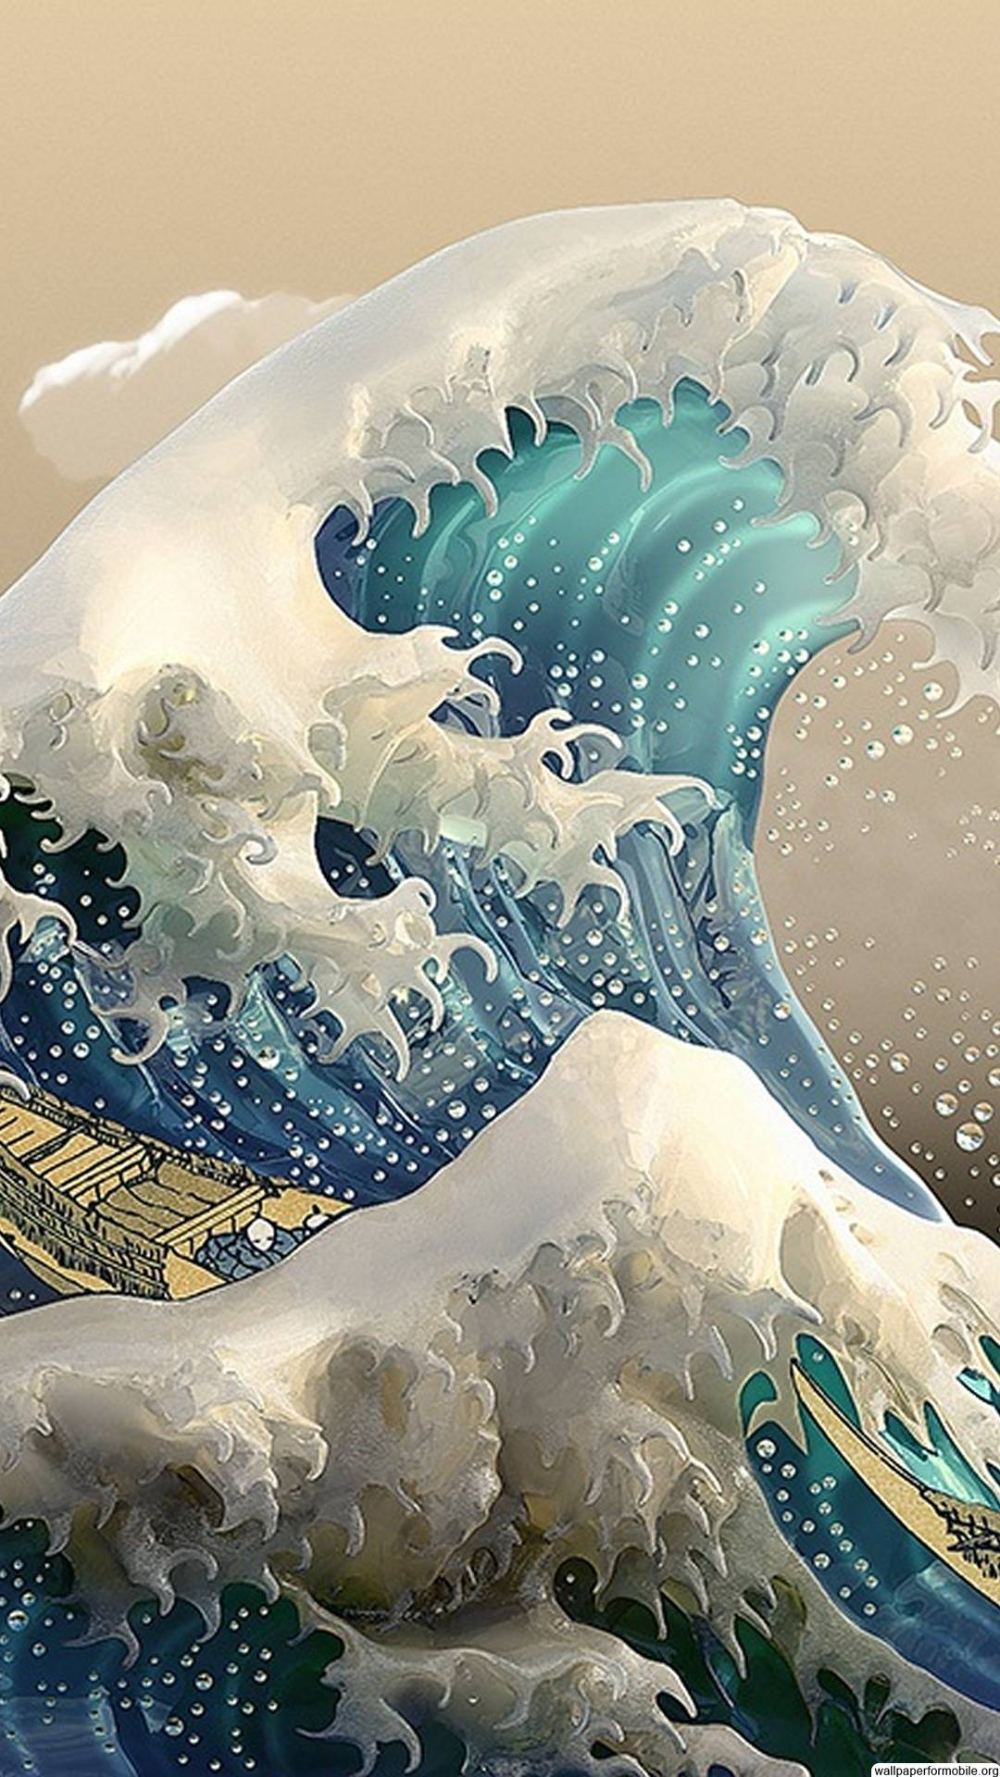 The Great Wave Off Kanagawa Wallpaper. Waves wallpaper, Japanese art, Art wallpaper iphone